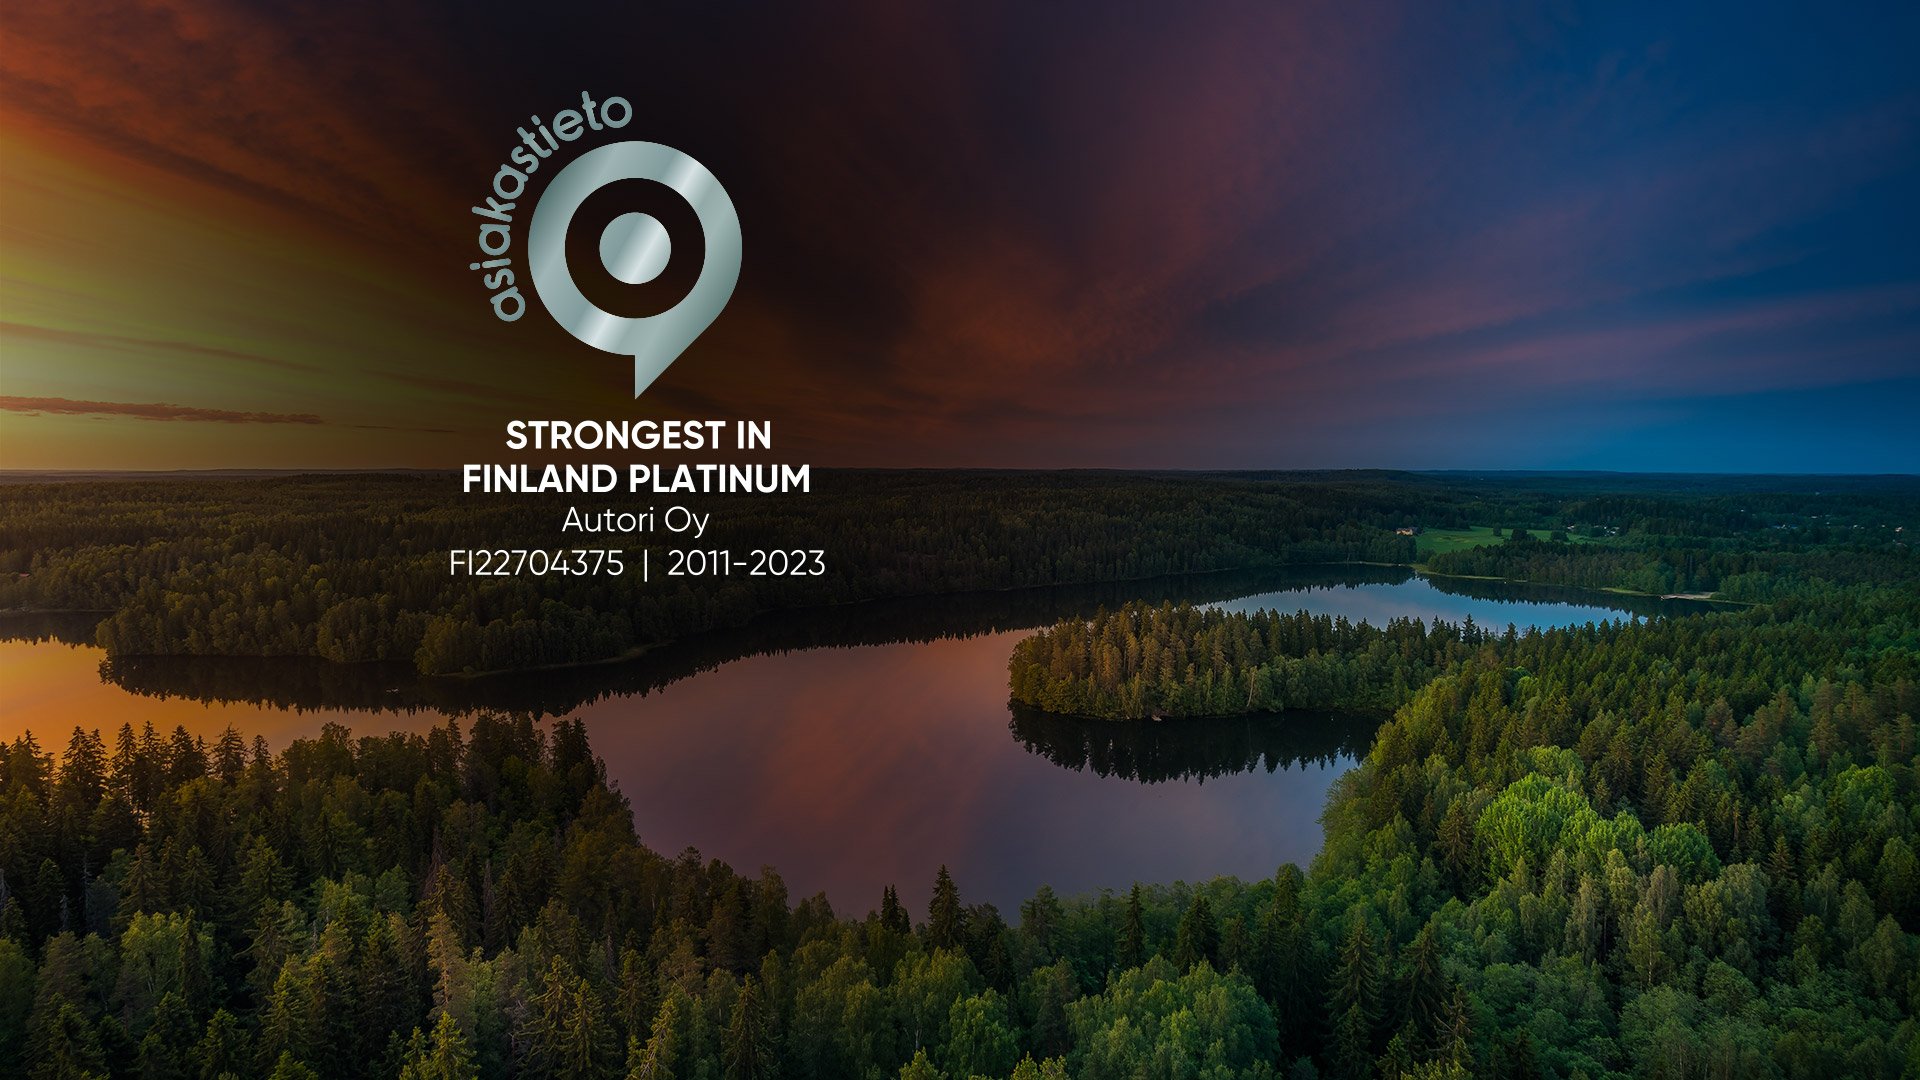 Strongest in Finland platinum certificate